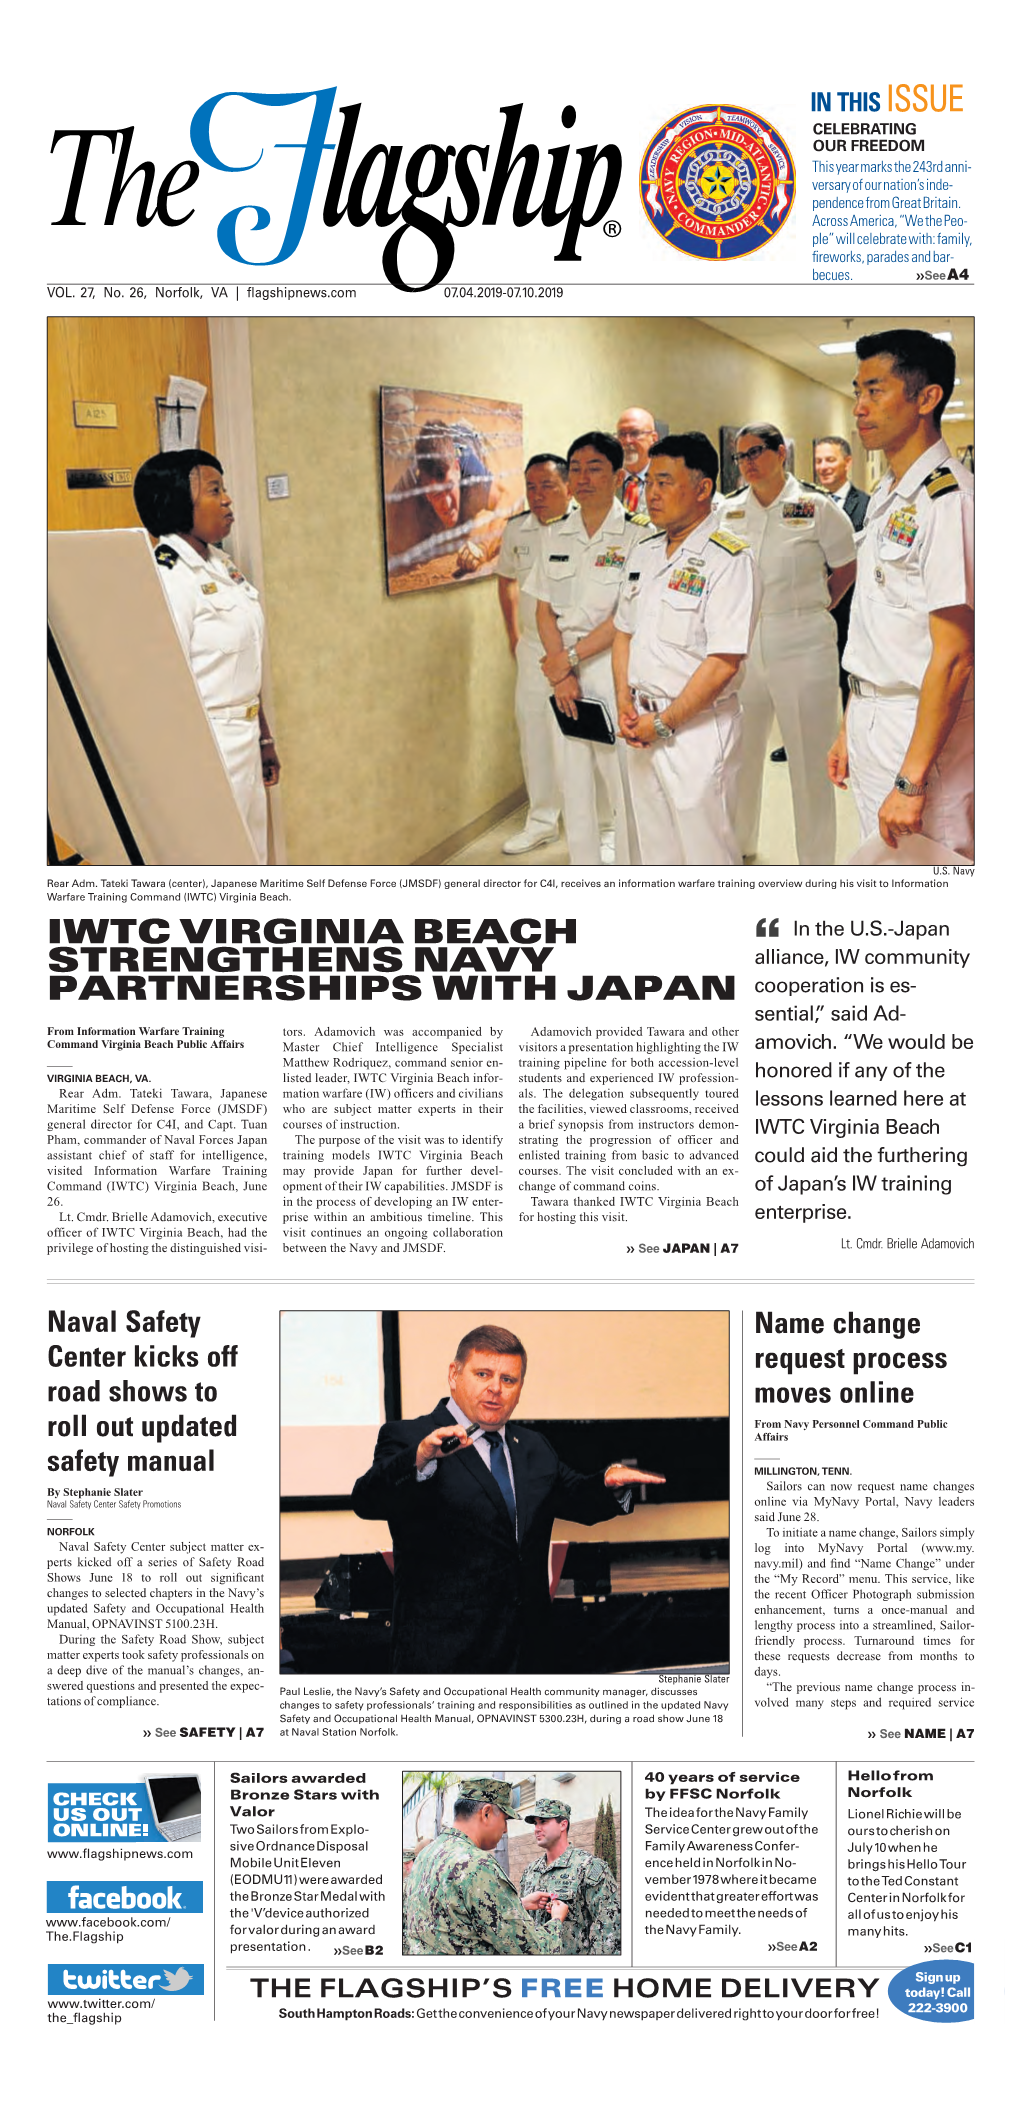 Iwtc Virginia Beach Strengthens Navy